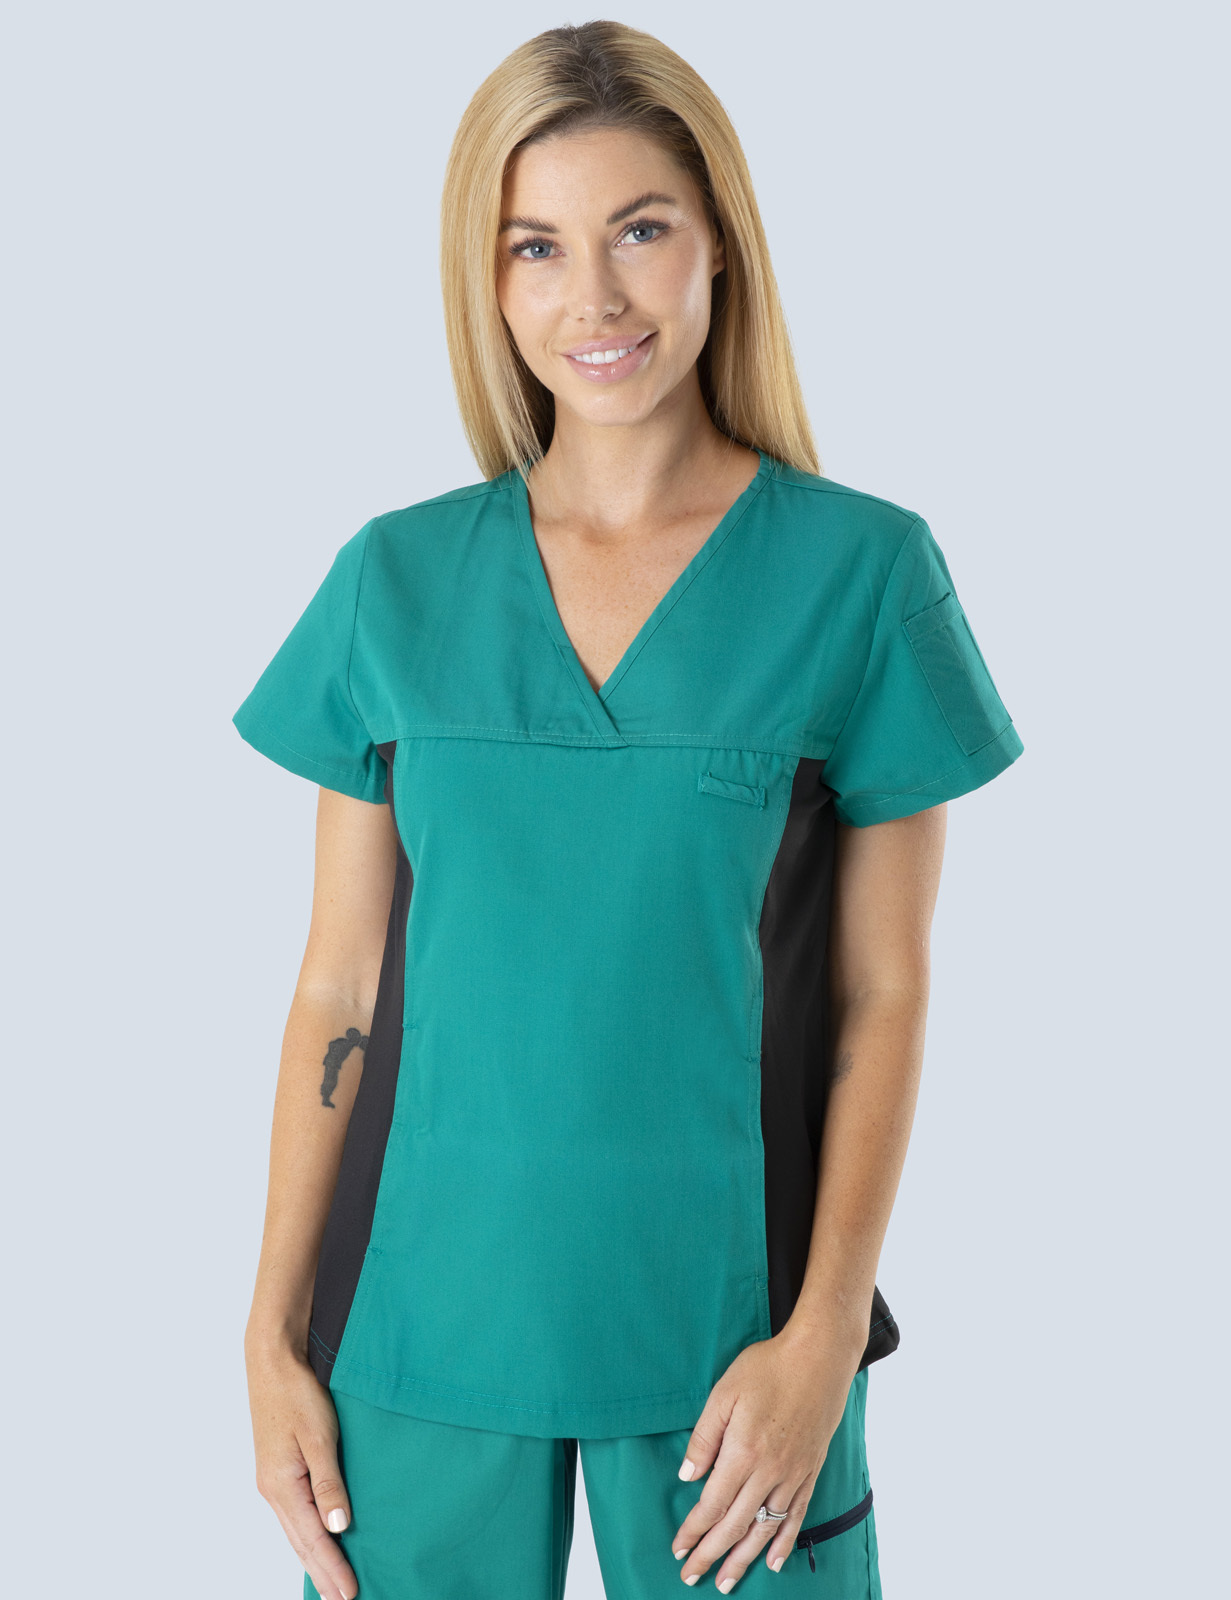 Ipswich Hospital Emergency Department Assistant In Nursing Uniform Set Bundle (Women's Fit SpandexTop and Cargo Pants in Hunter + 3 Logo)